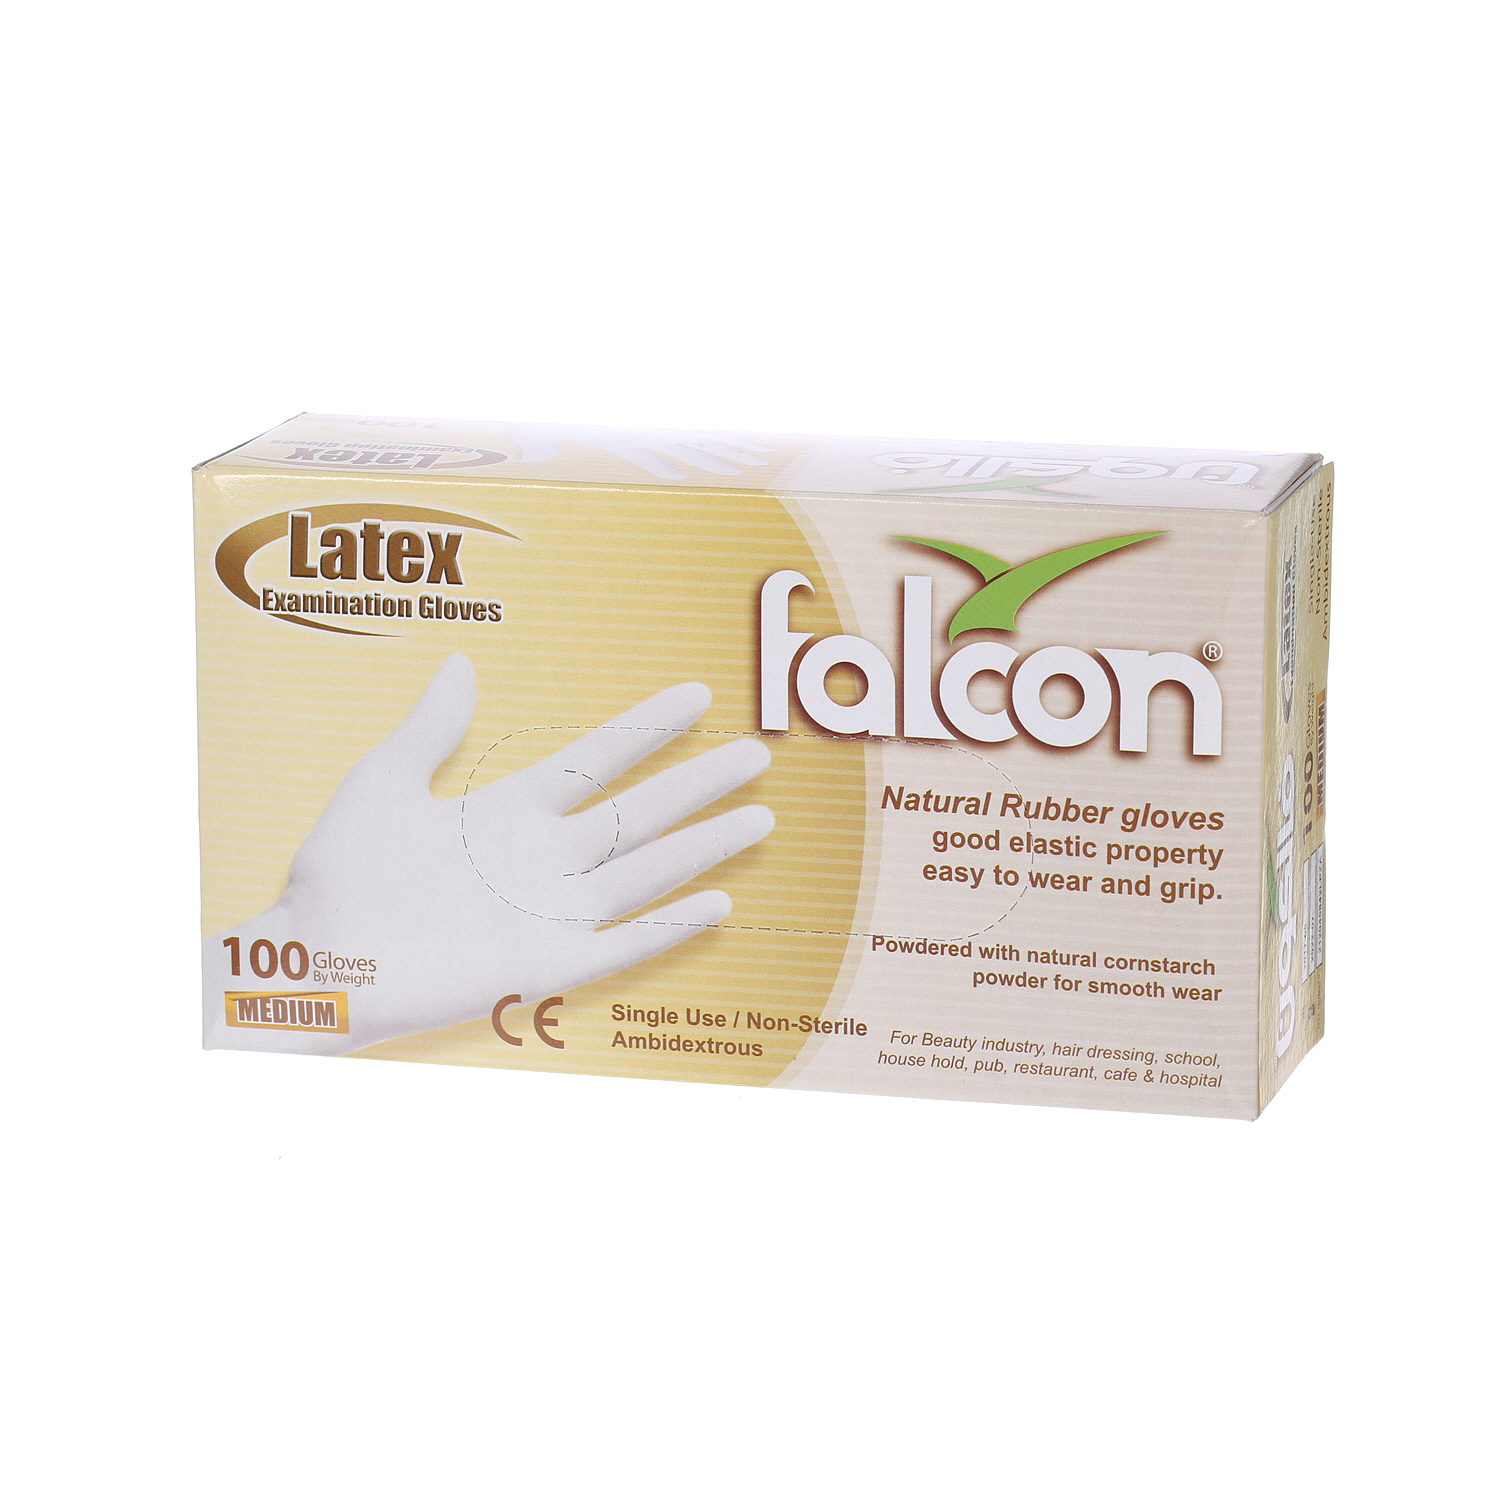 Falcon Latex Gloves Medium 100 Pieces